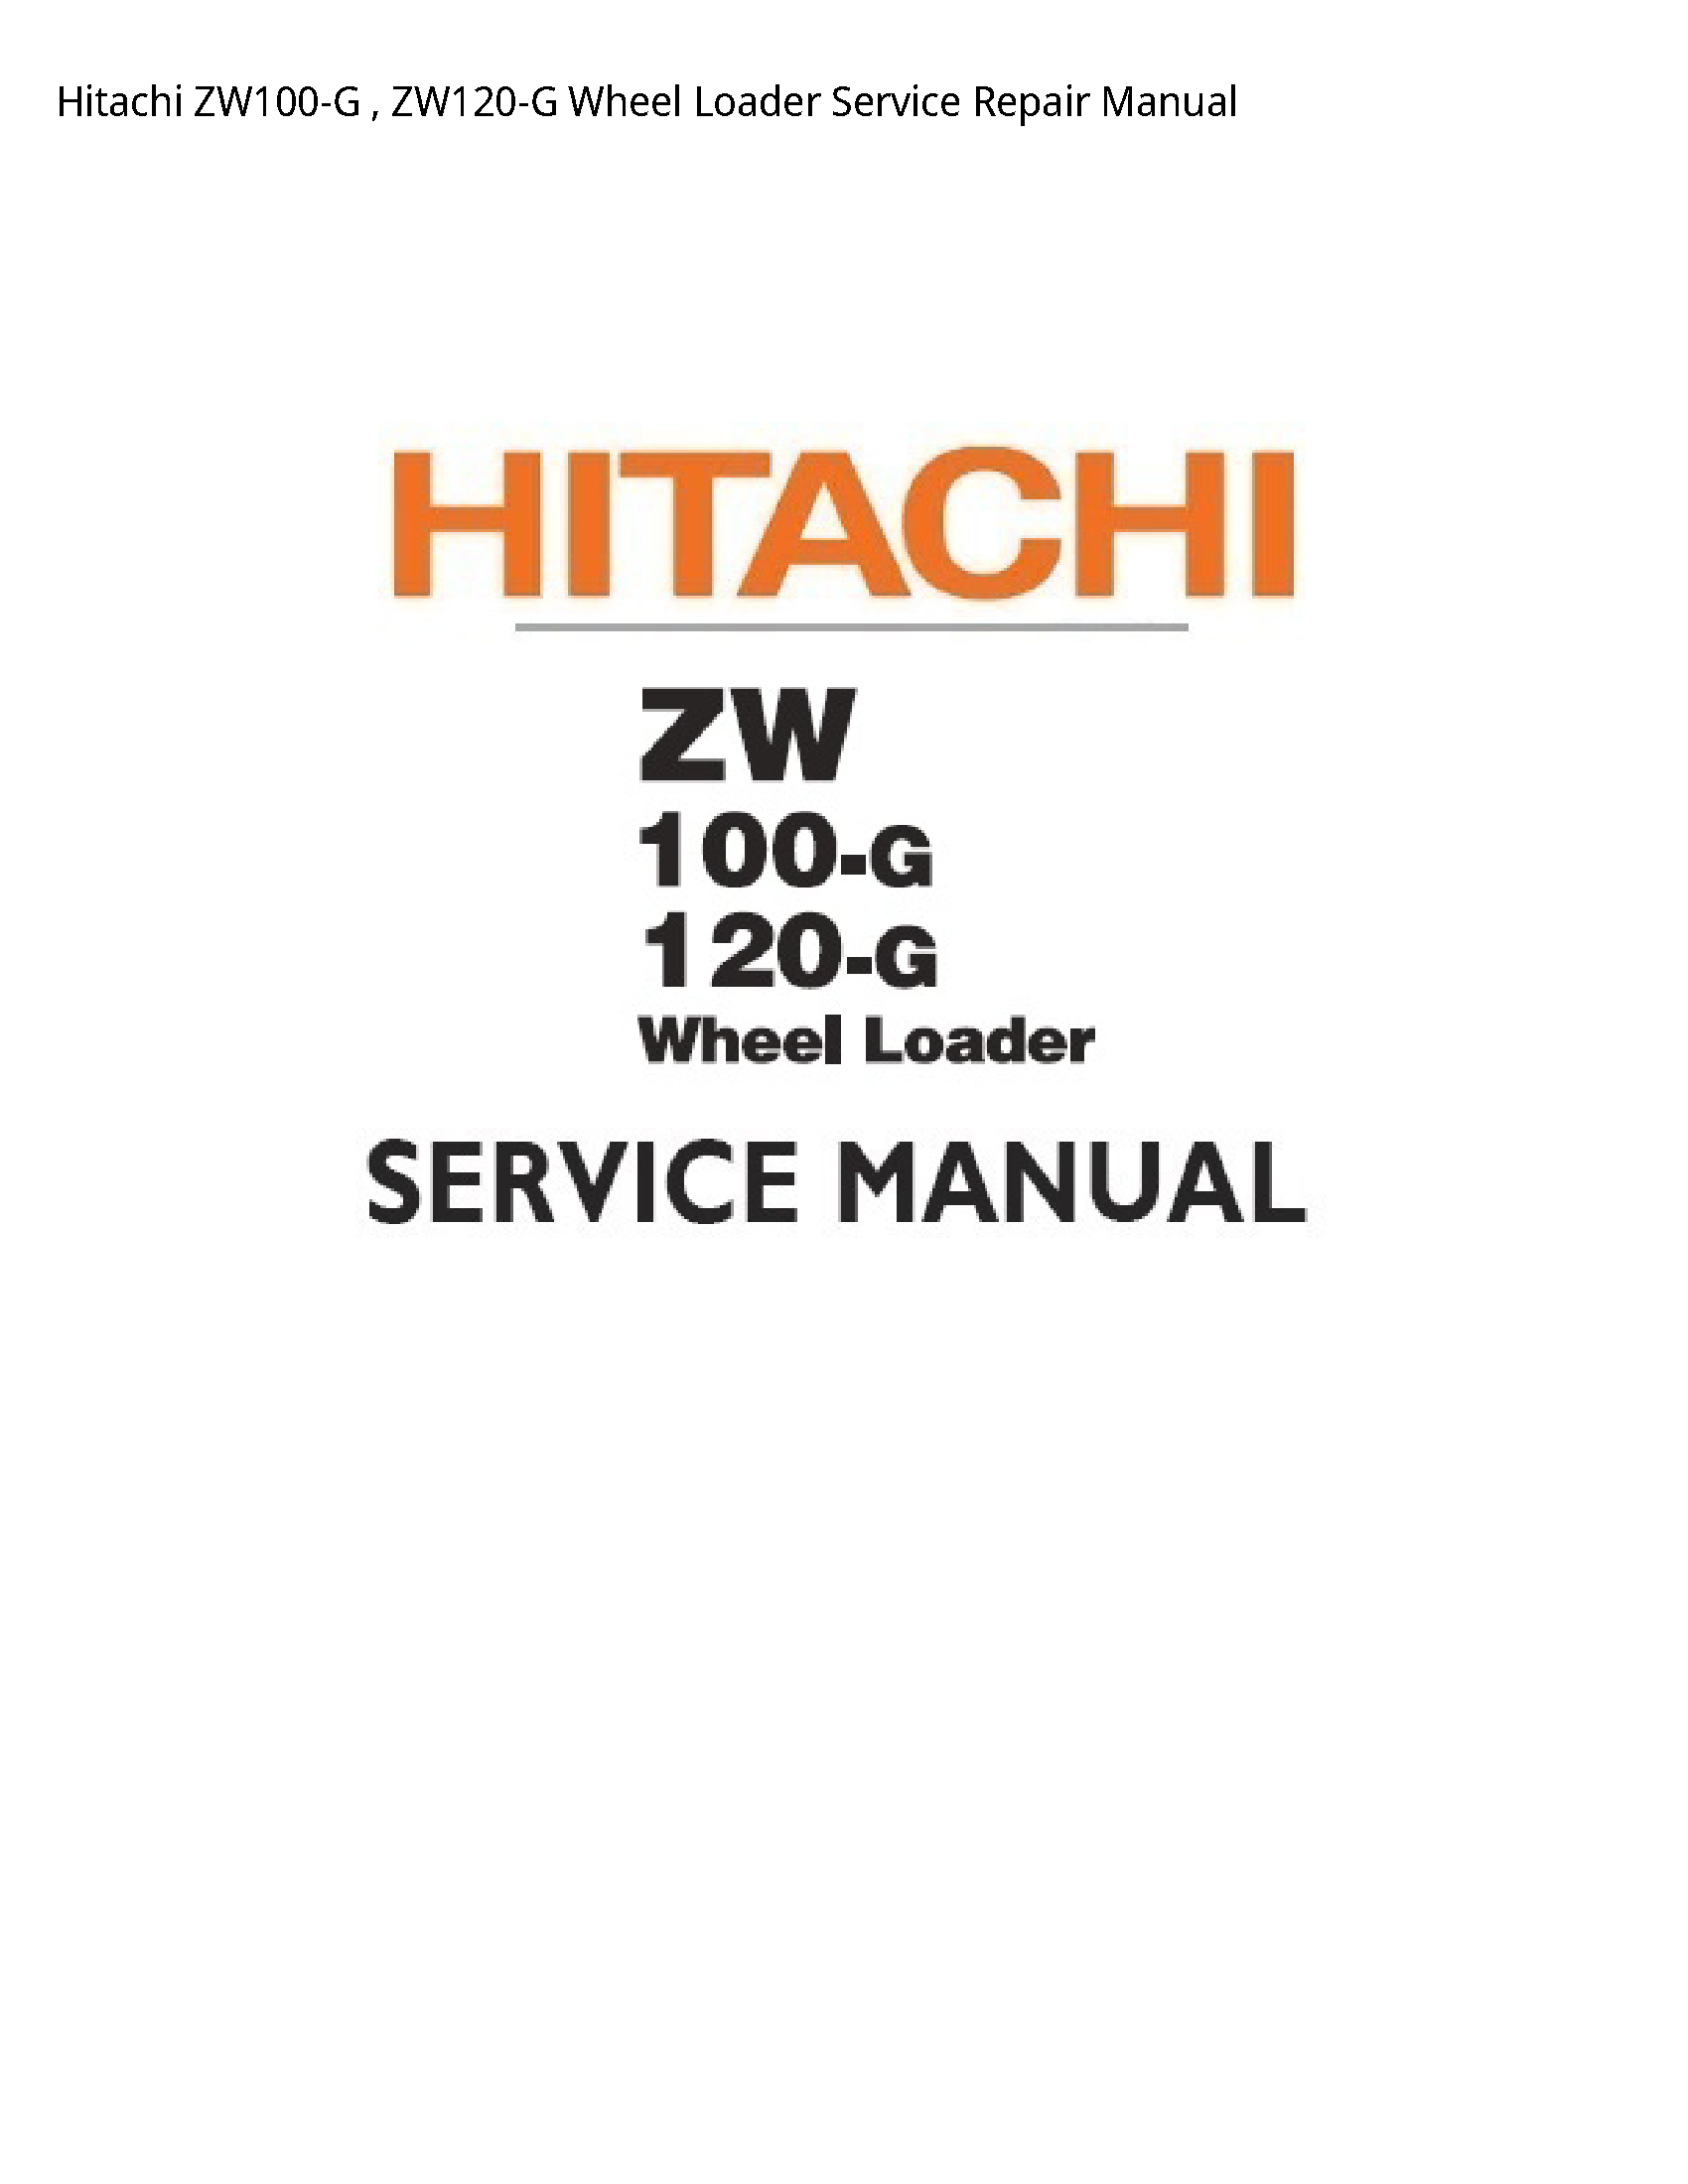 Hitachi ZW100-G Wheel Loader manual